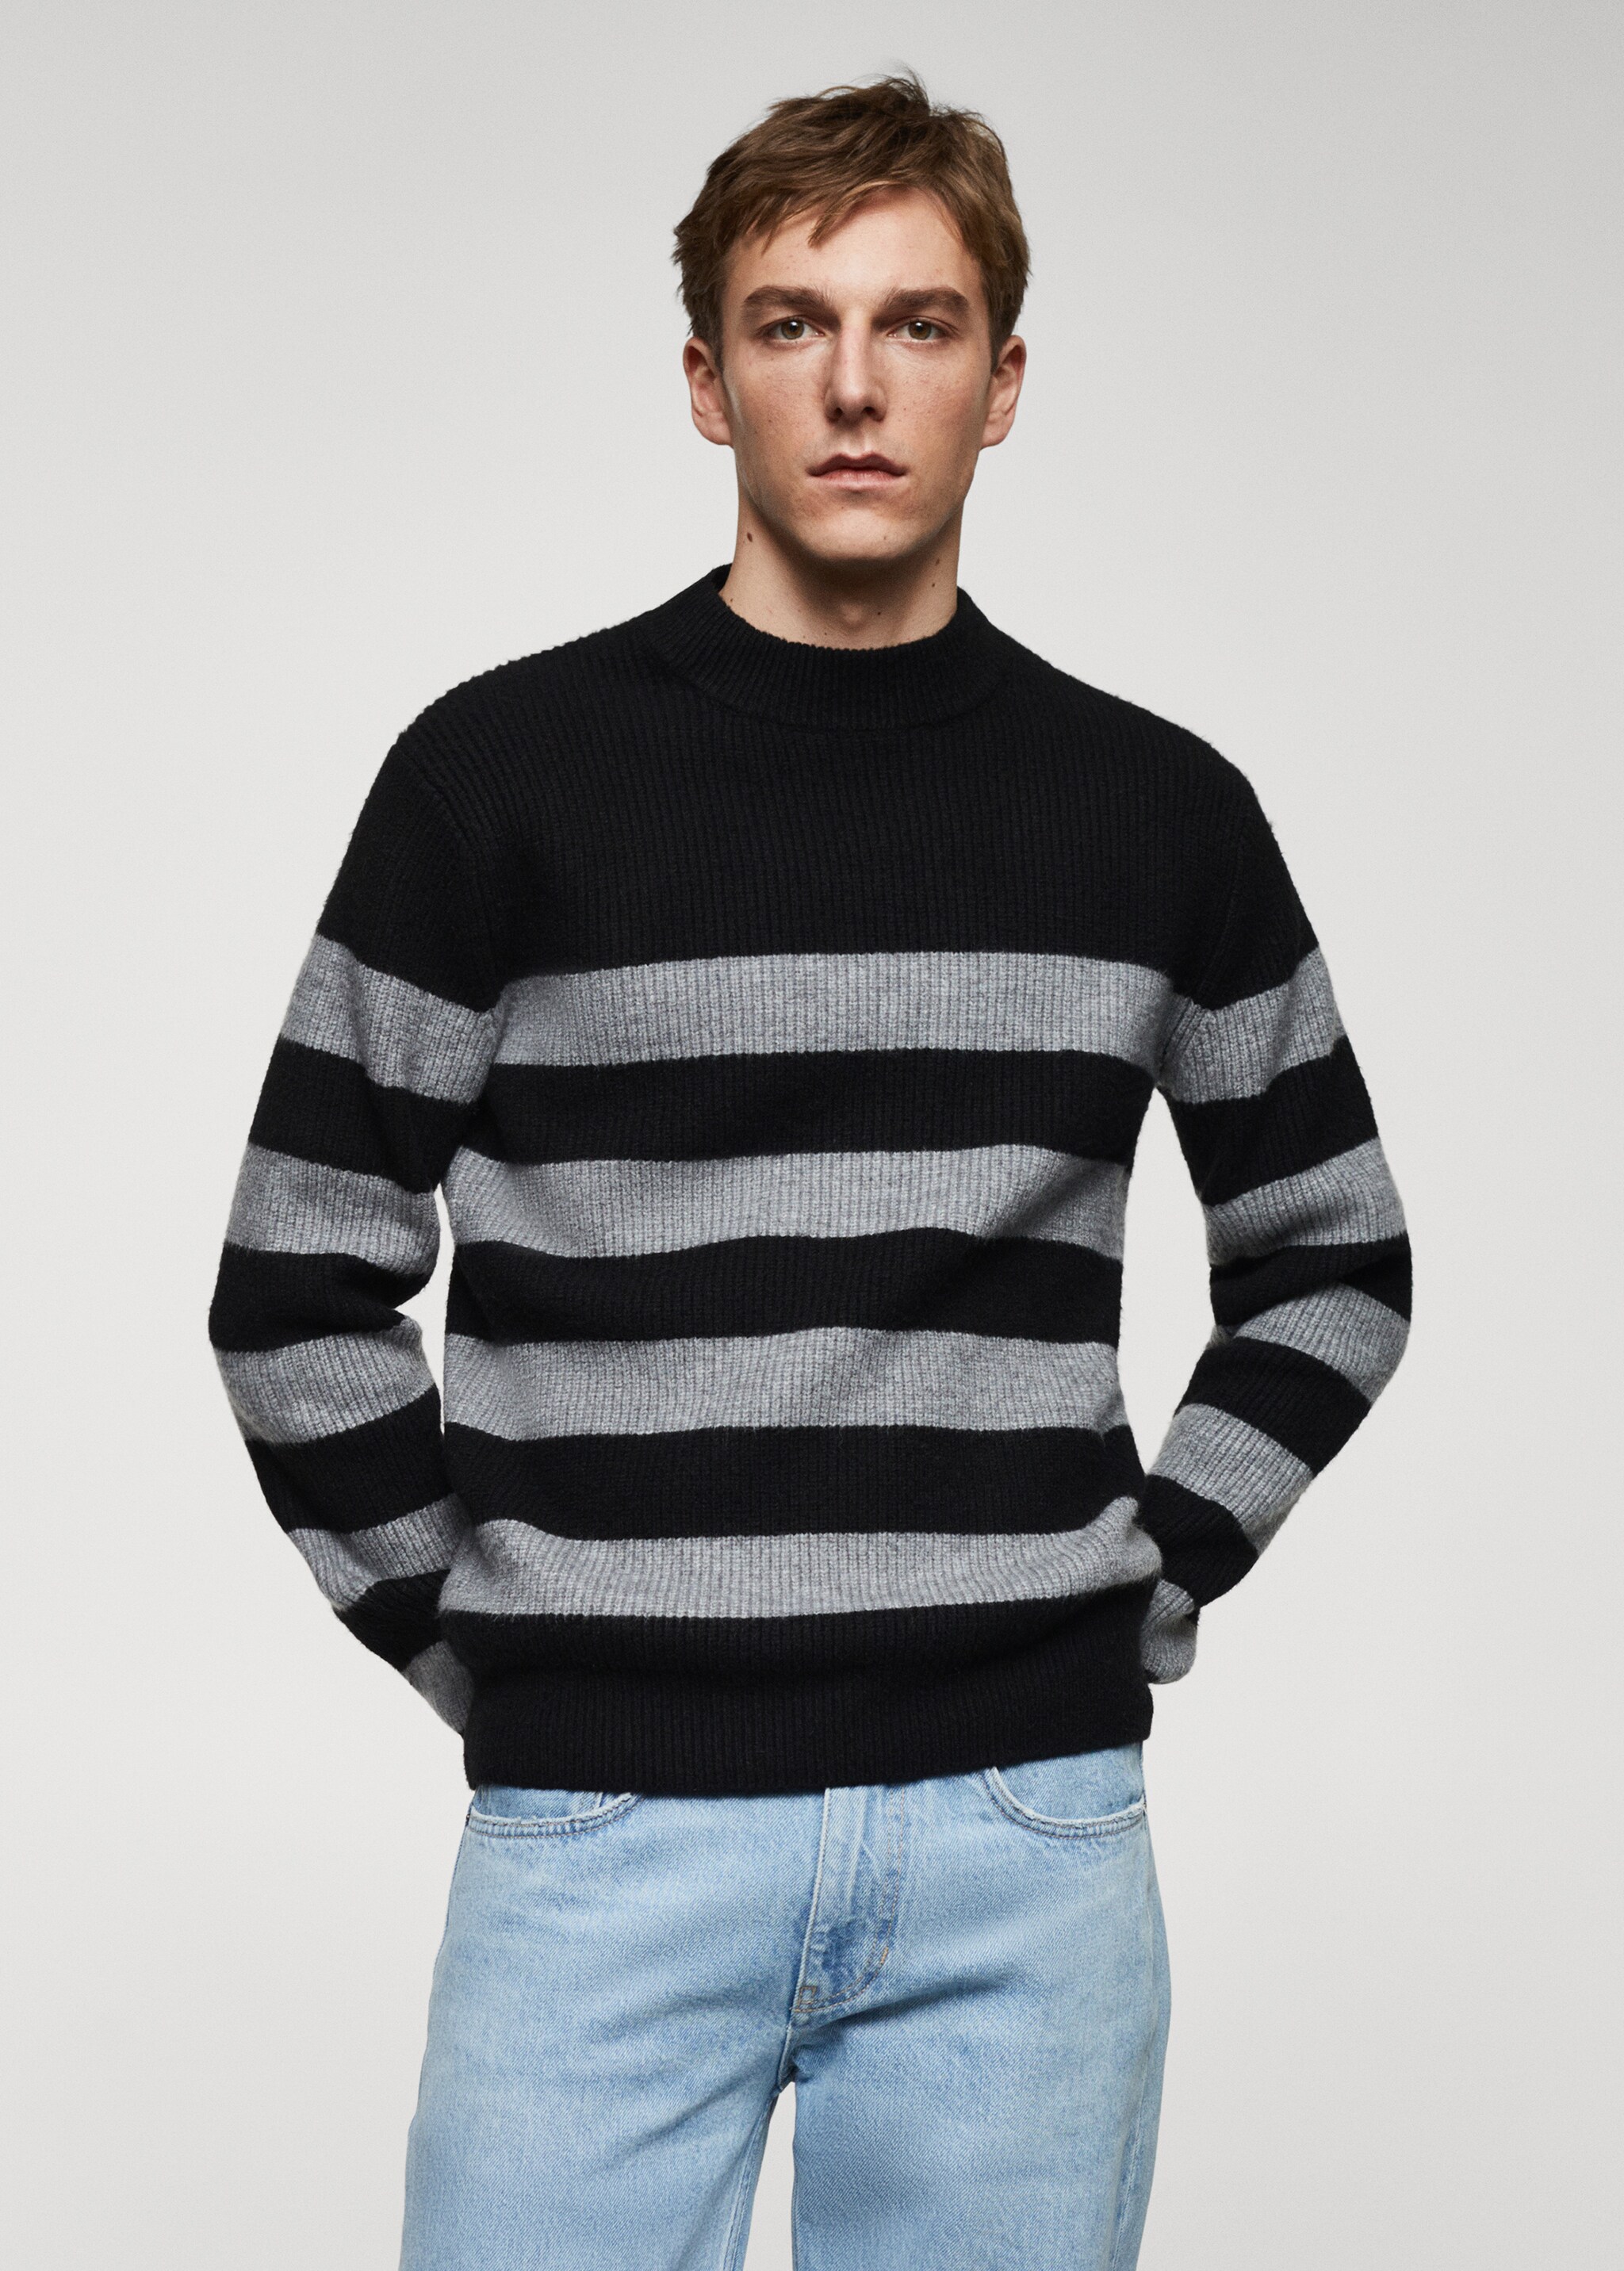 Striped perkins collar sweater - Medium plane